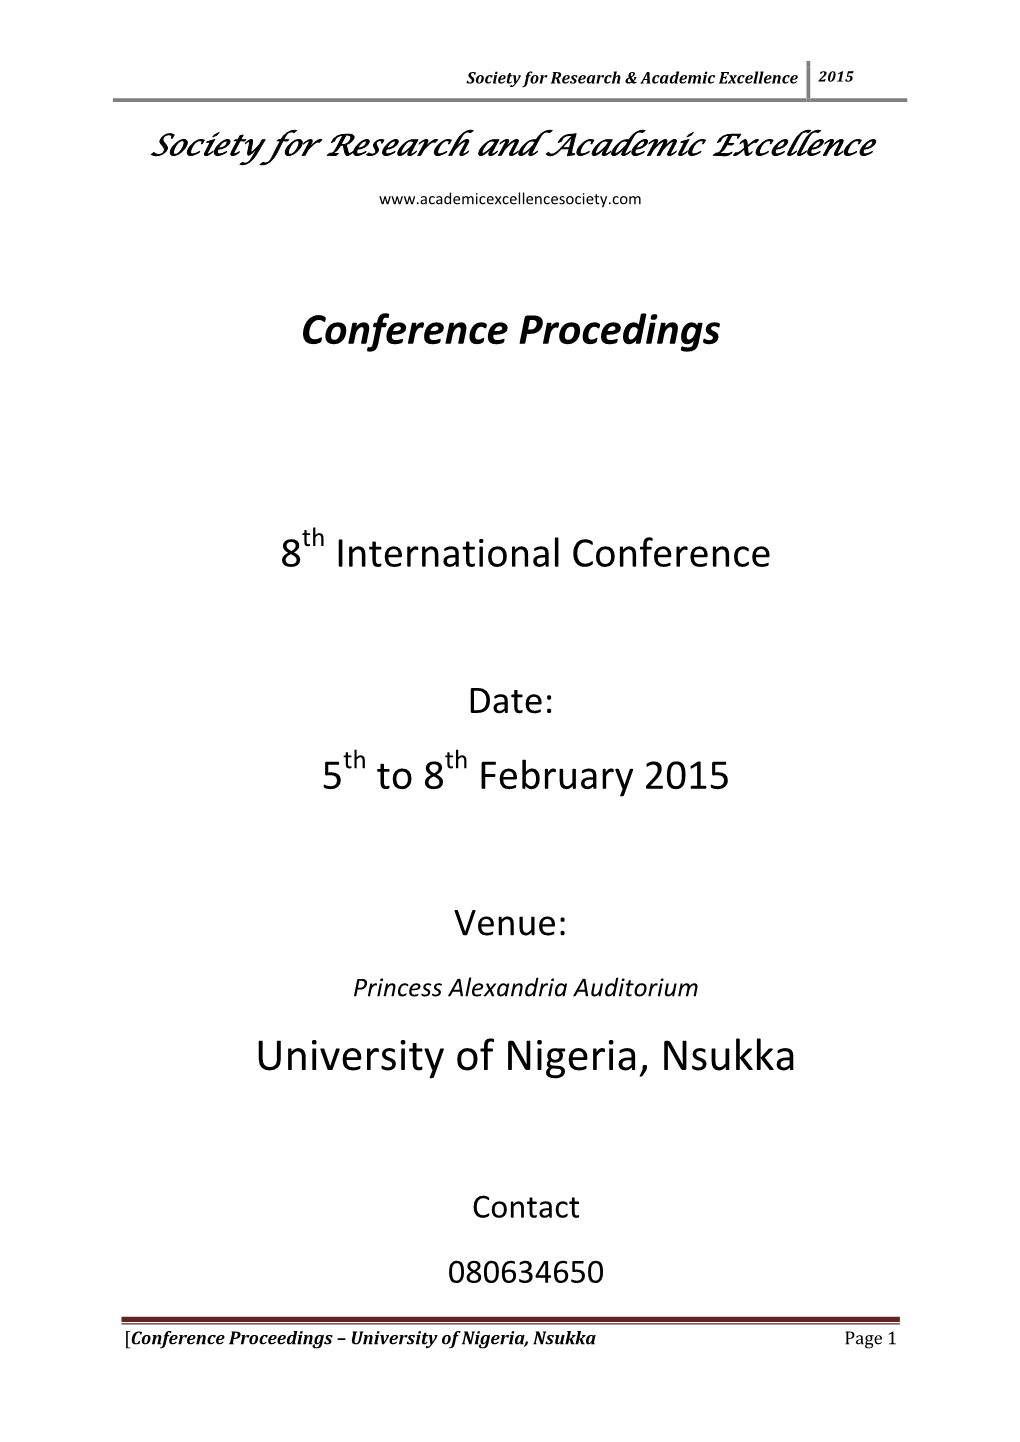 Conference Proceedings – University of Nigeria, Nsukka Page 1